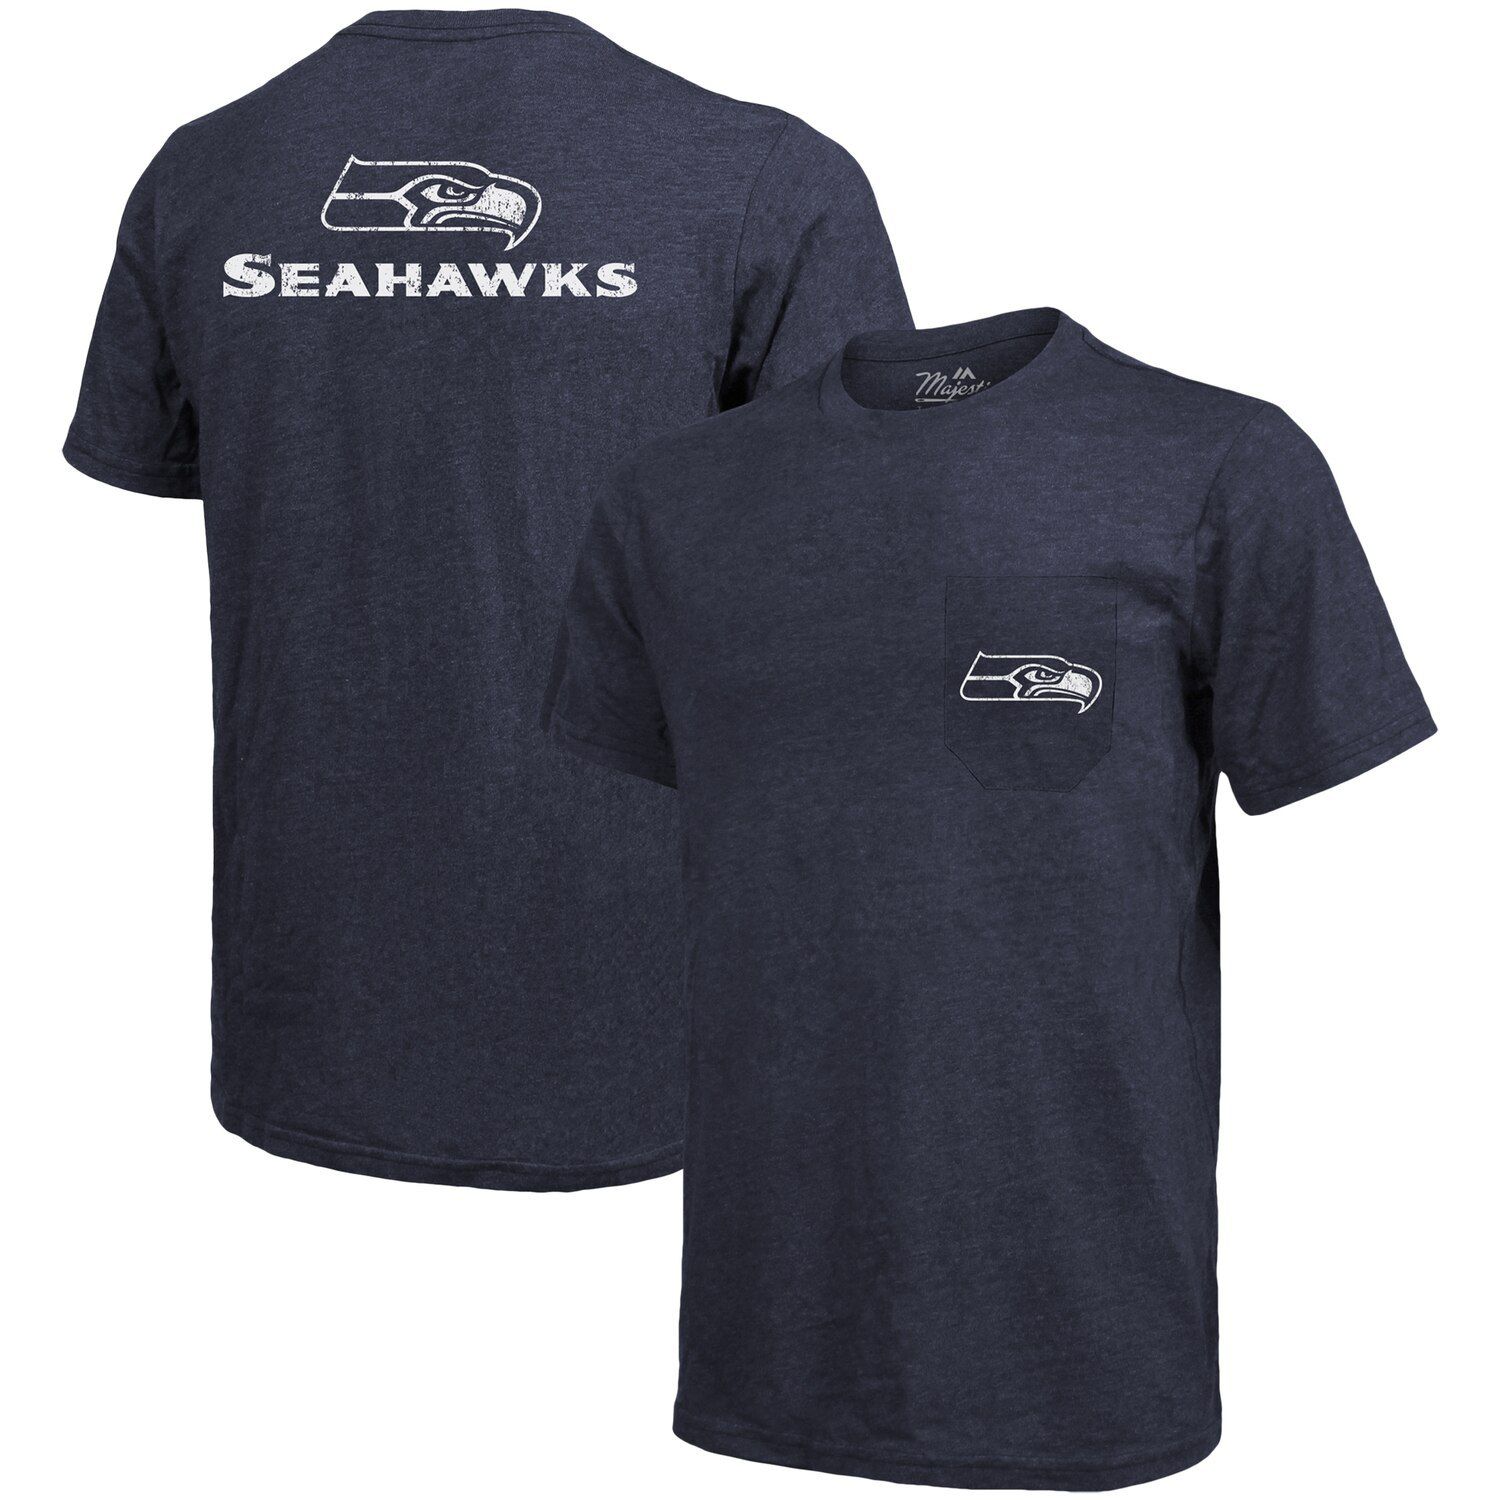 Футболка с карманами Tri-Blend Threads Seattle Seahawks Threads - Темно-синий Majestic футболка с карманами tri blend new york jets threads меланжево зеленый majestic